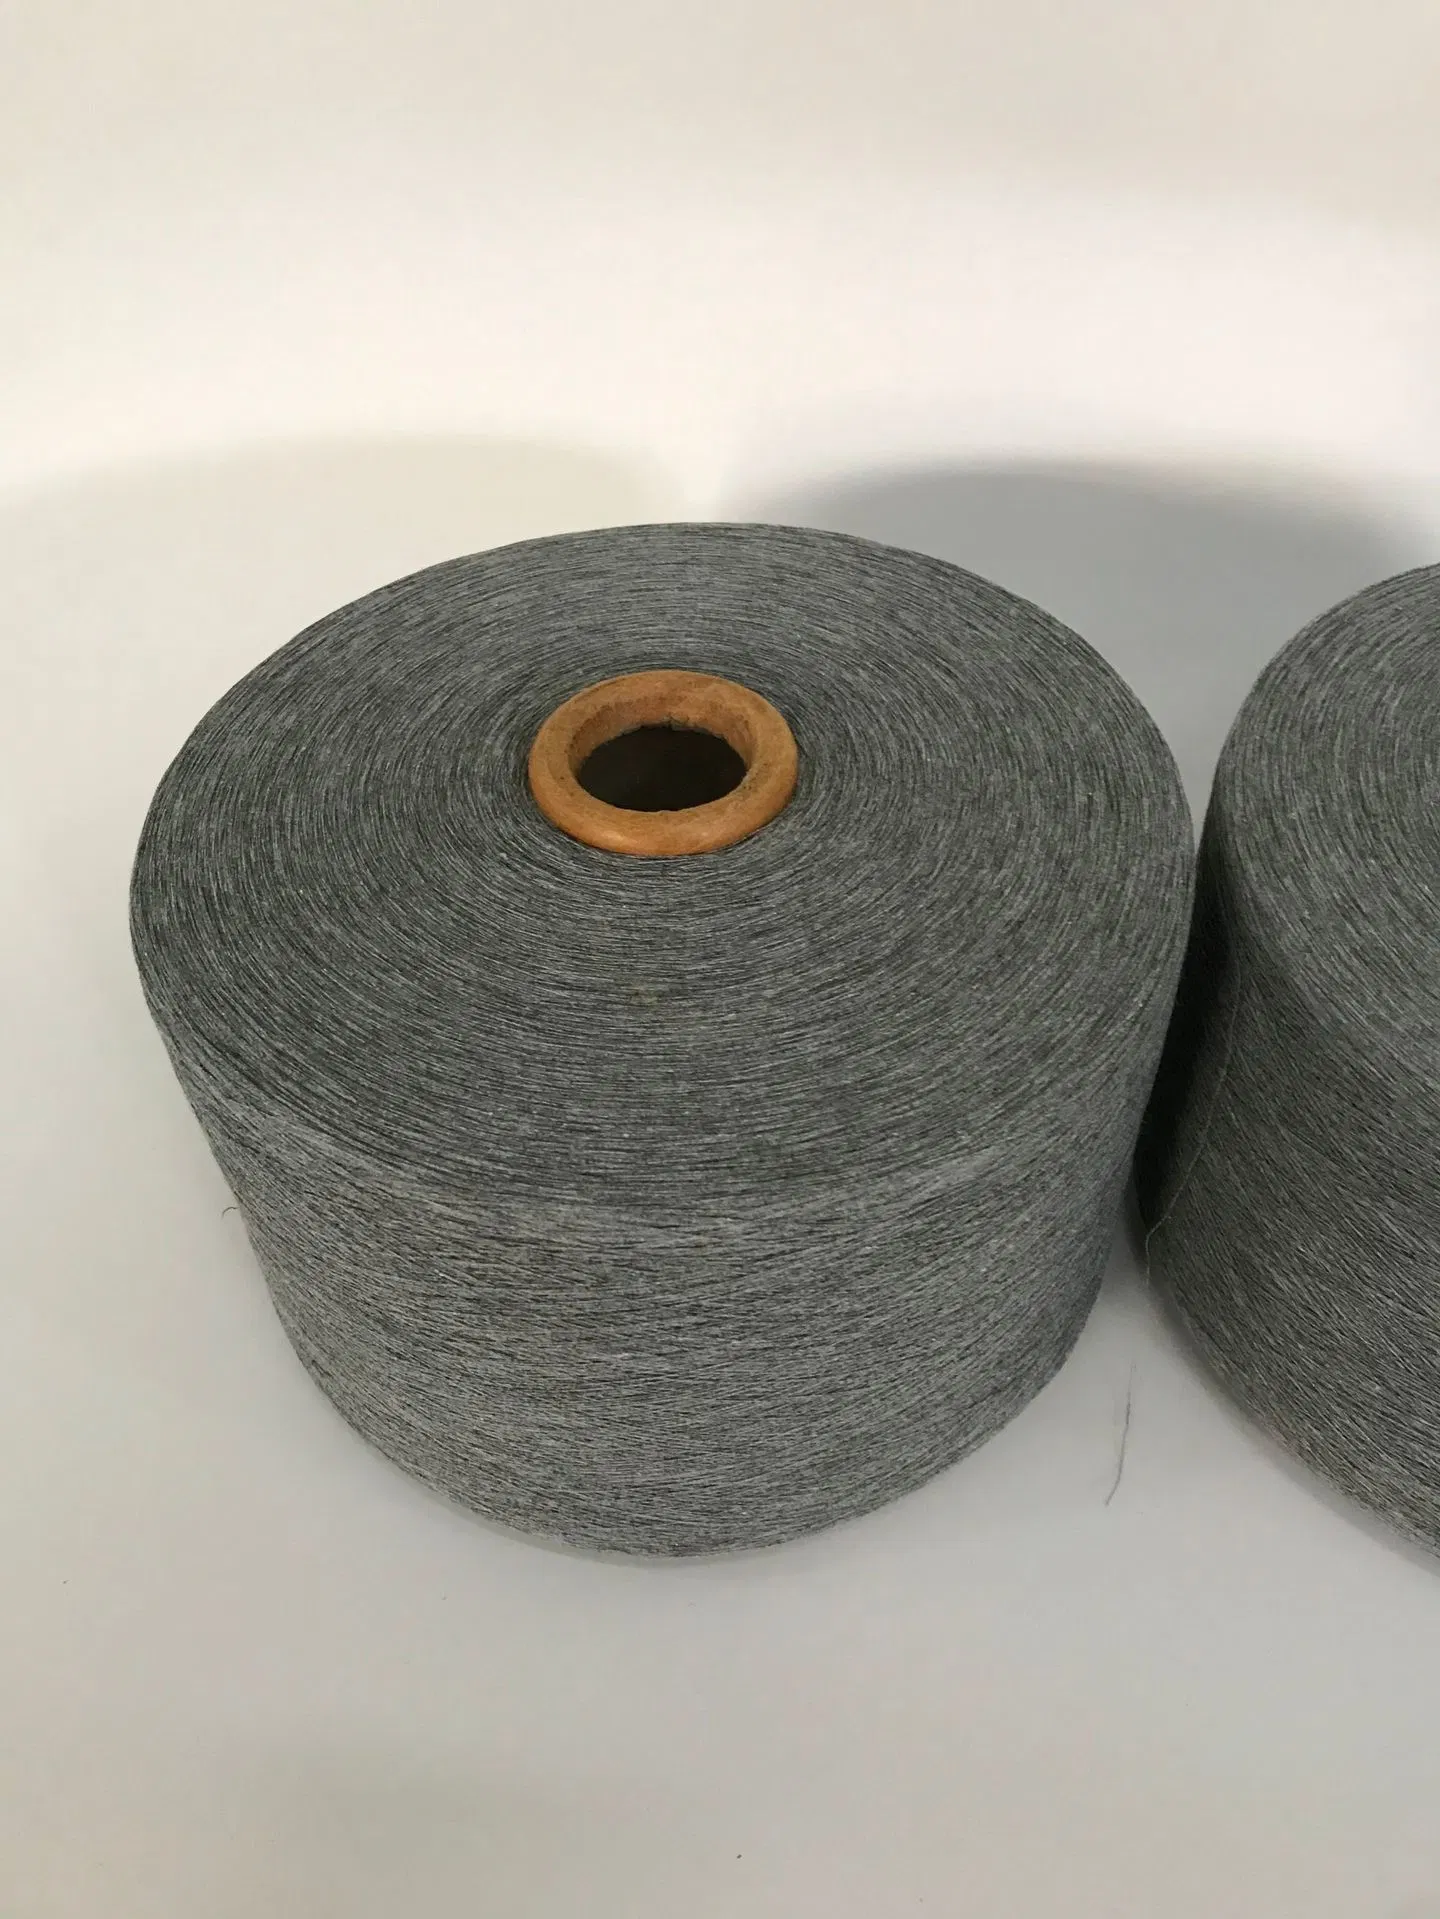 Recycled 100% Viscose Rayon Vortex Spinning Barrygrey Yarn 30s/1 19# for Knitting